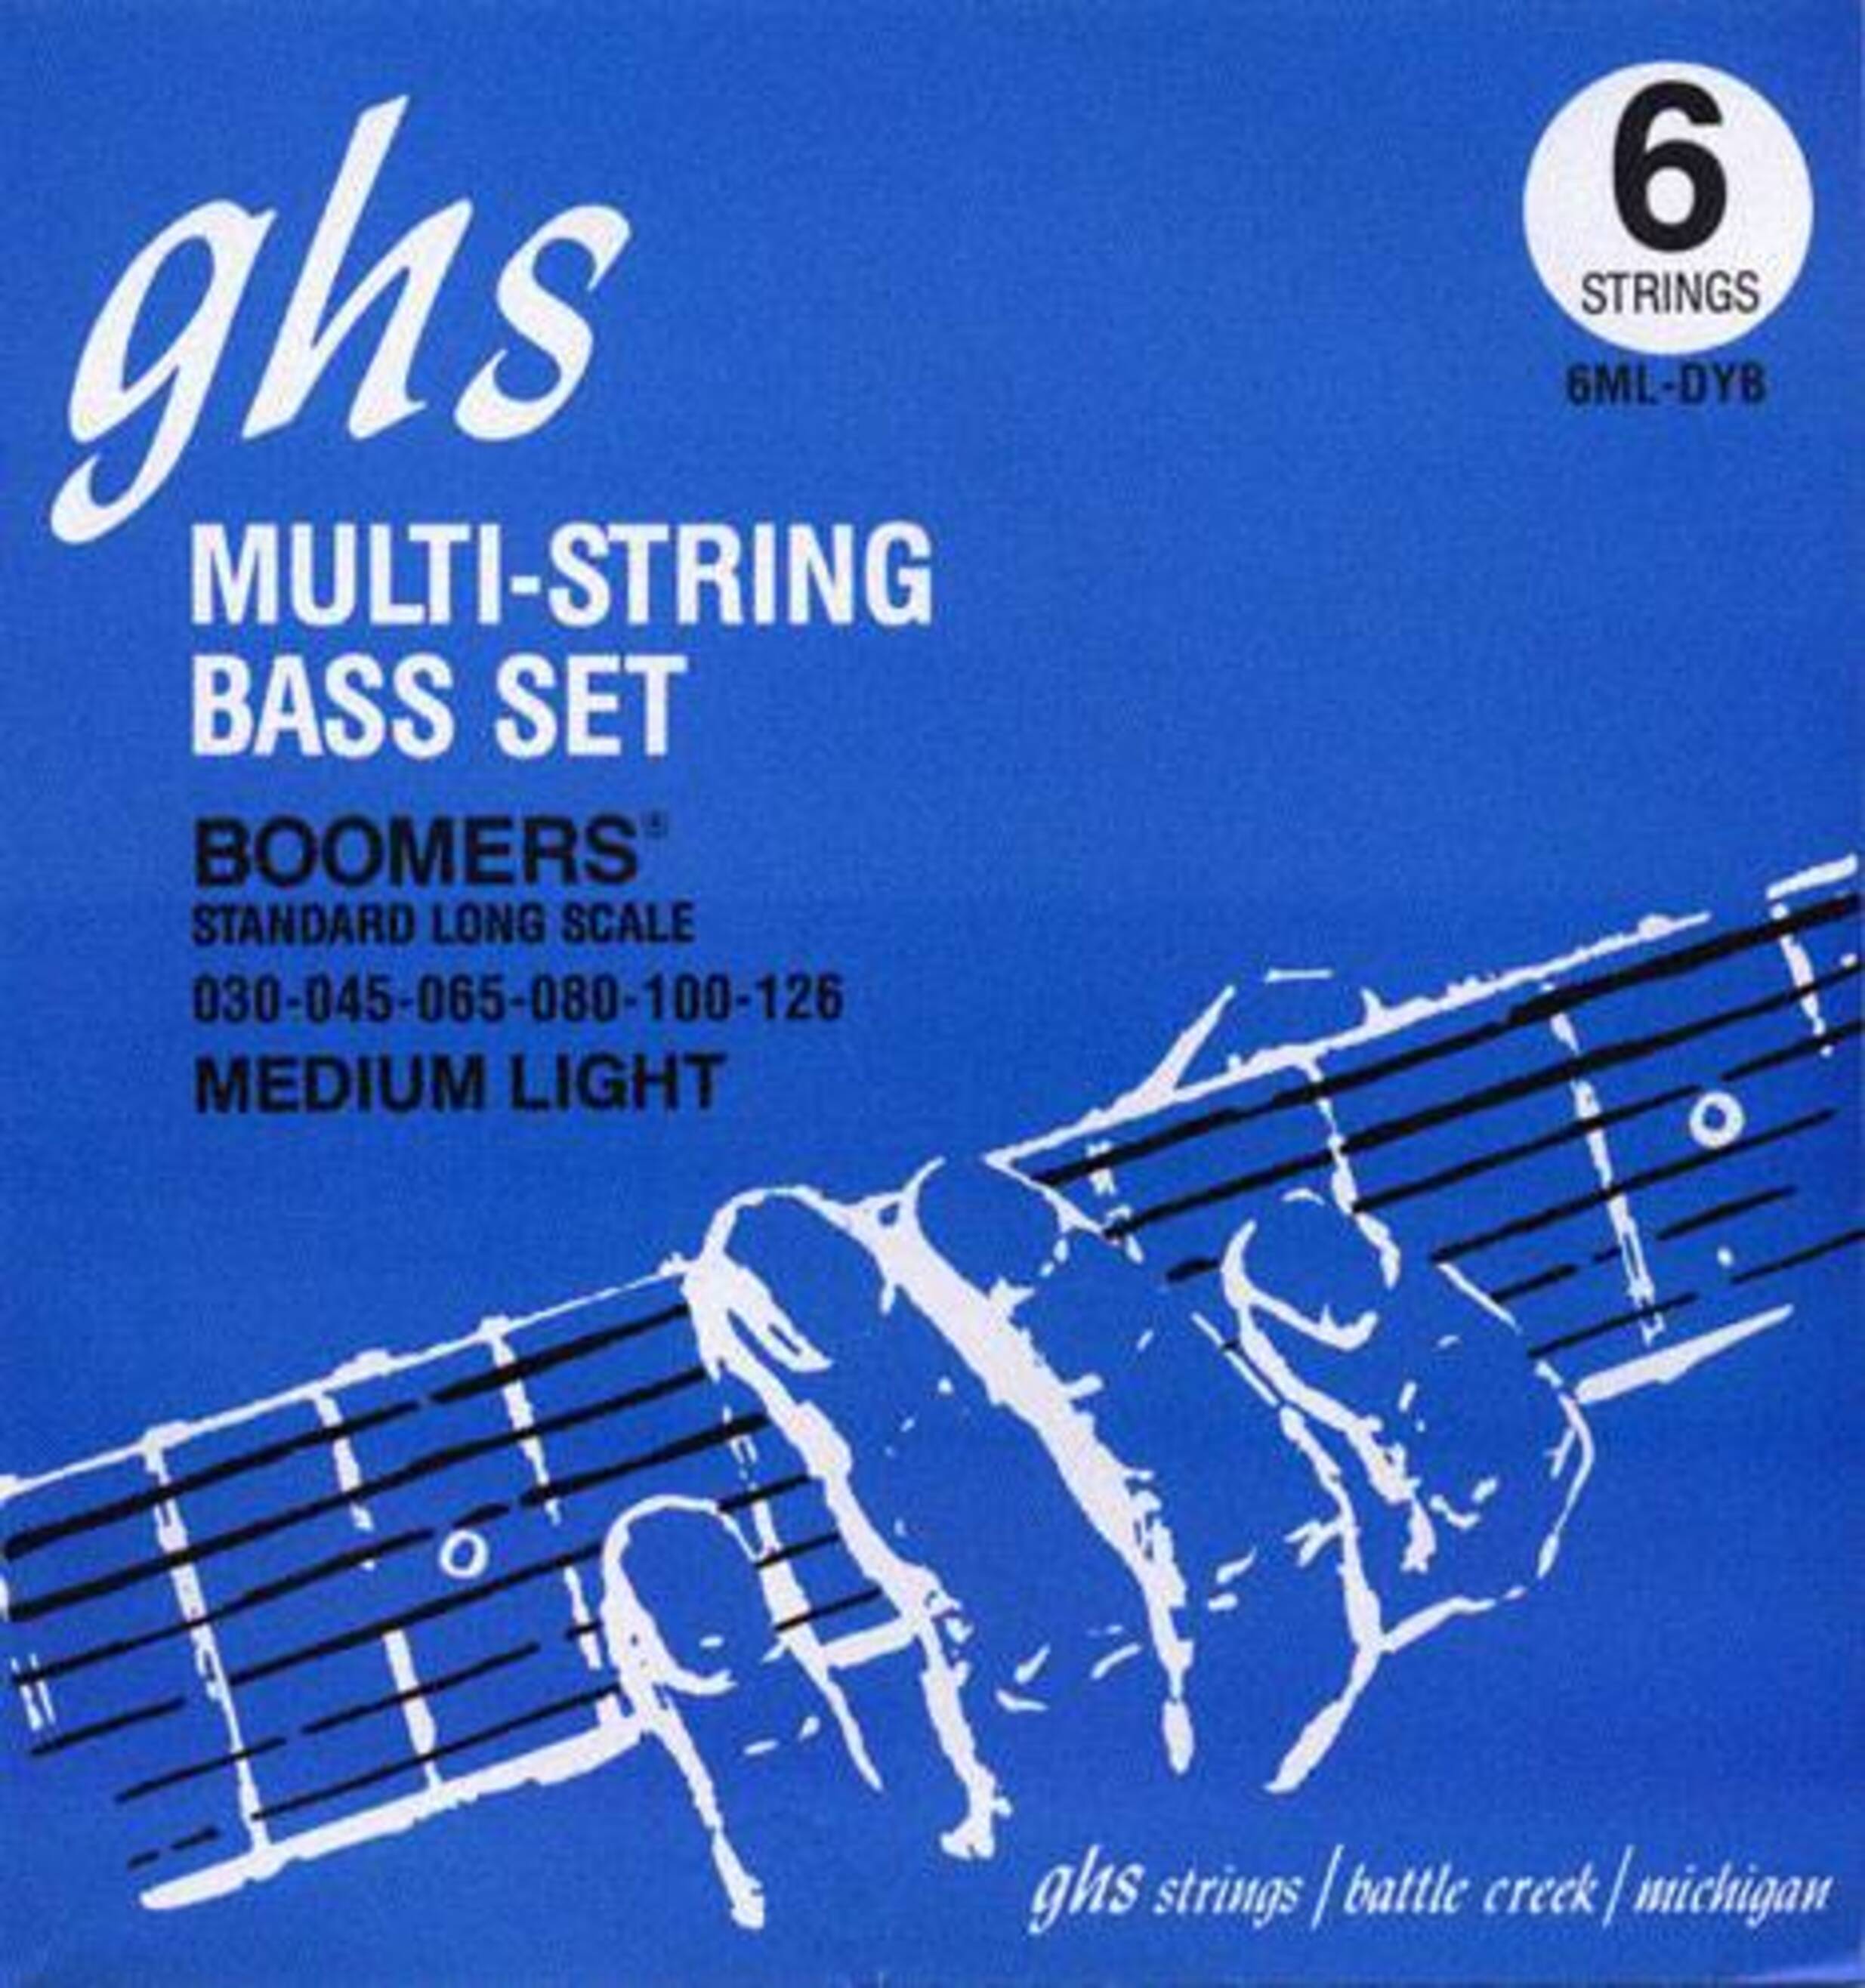 Струны GHS Strings 6ML-DYB струны la bella rx s6c